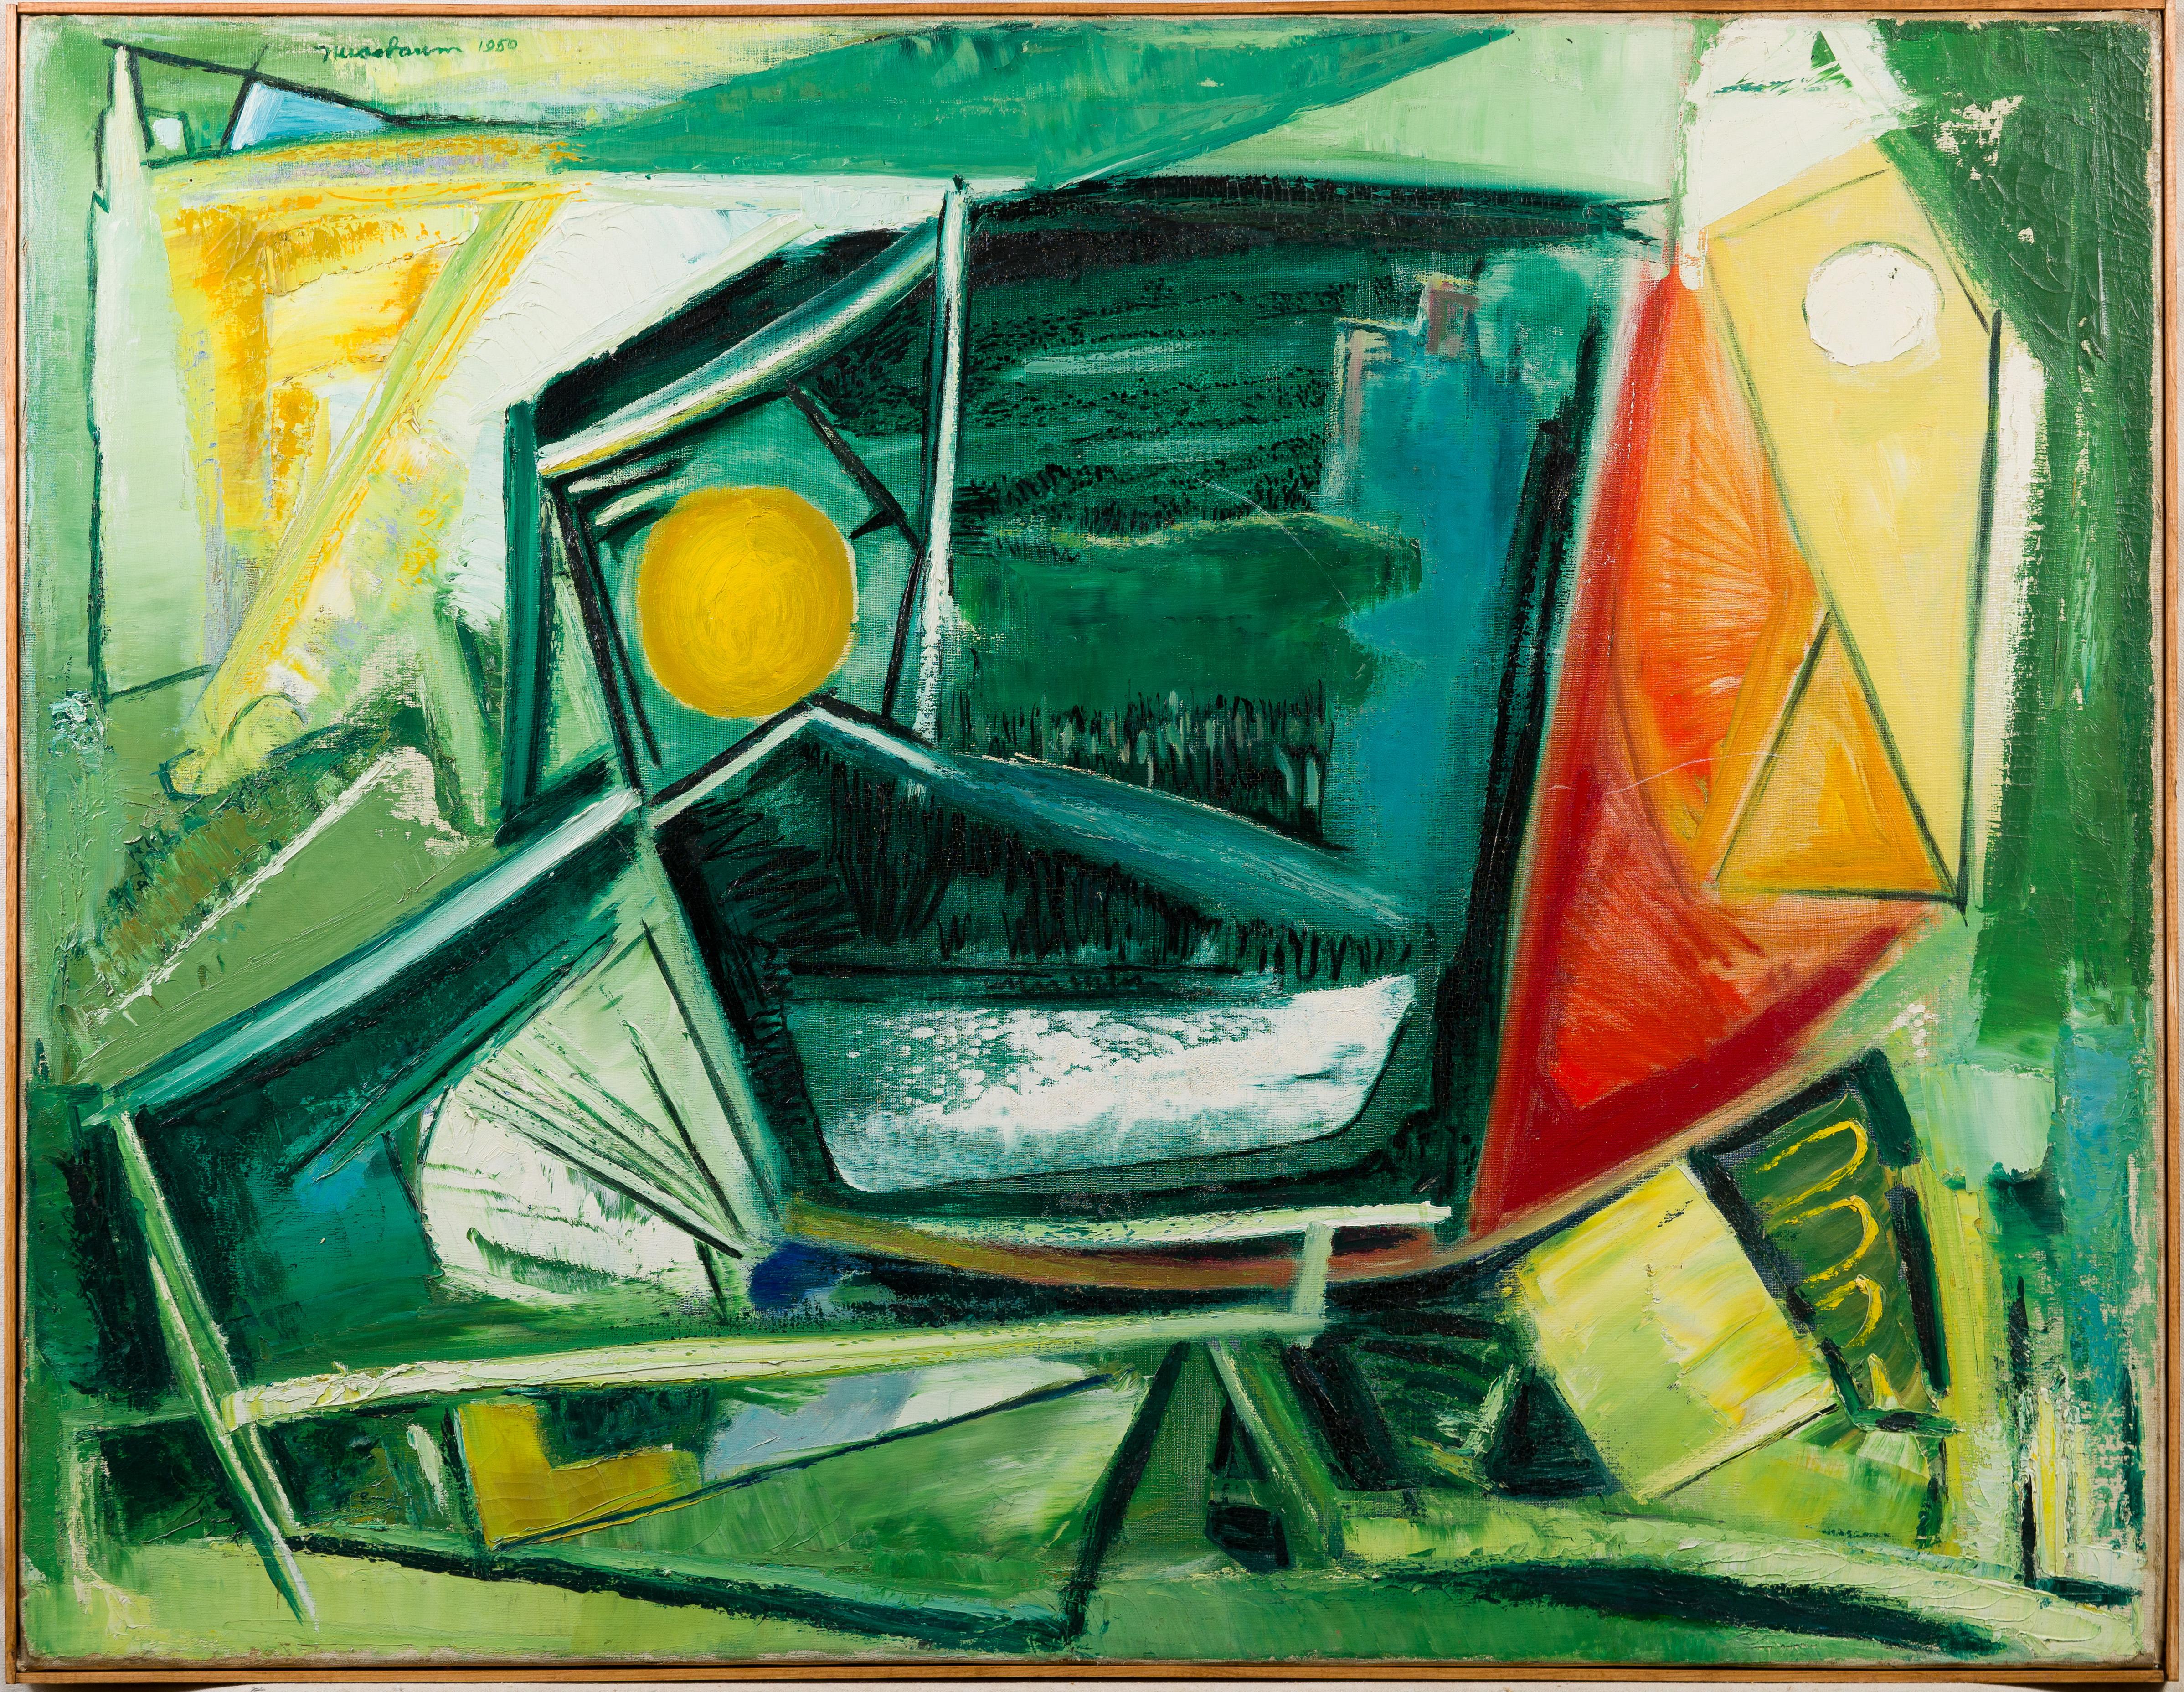 Ervin B. Nussbaum Landscape Painting - Vintage American Modernist Abstract Expressionist Framed Cubist Oil Painting